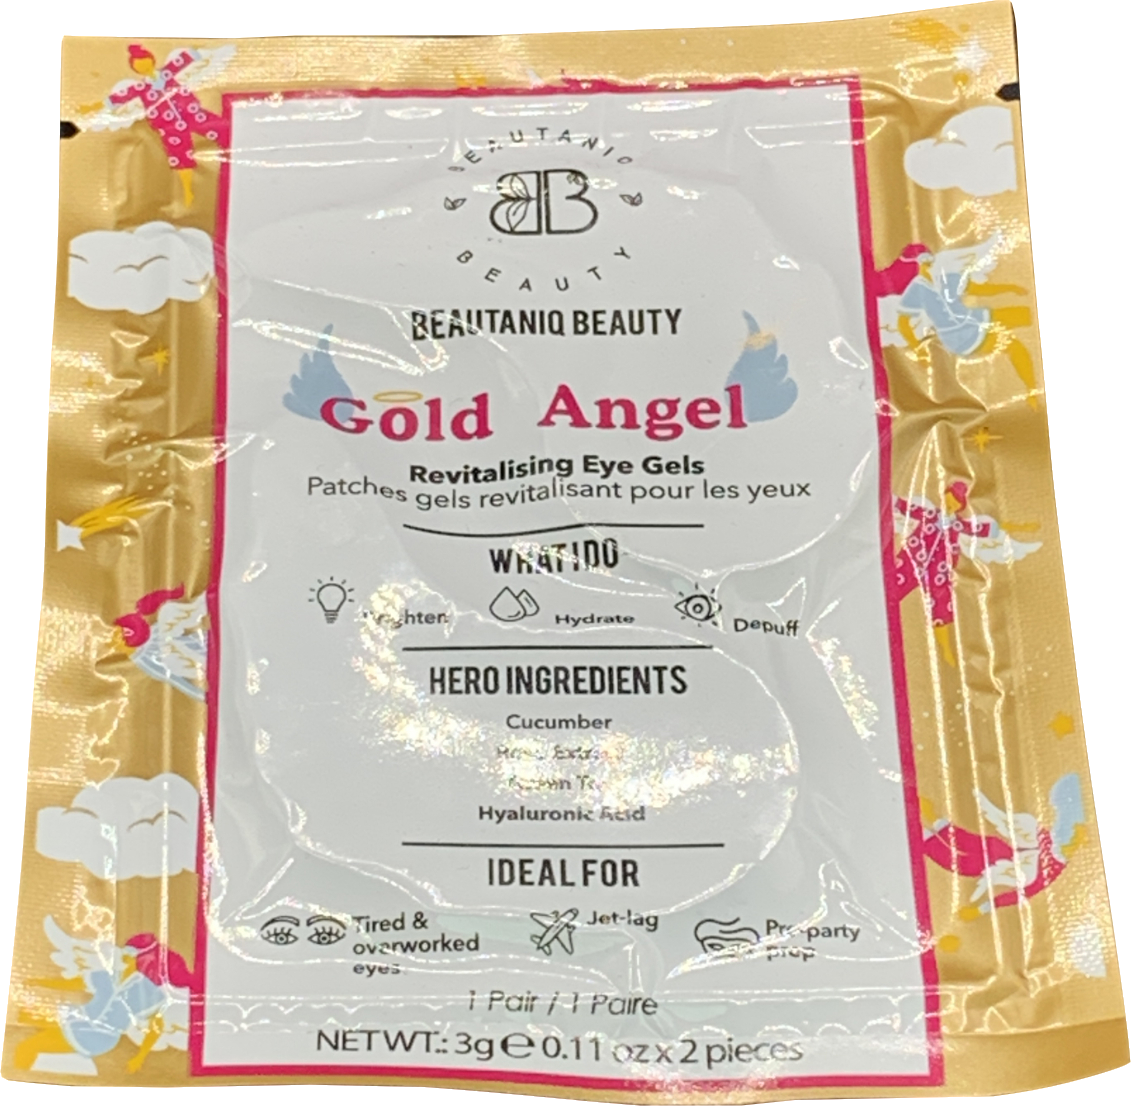 beautaniq beauty Gold Angel Revitalising Eye Gels 1 pair